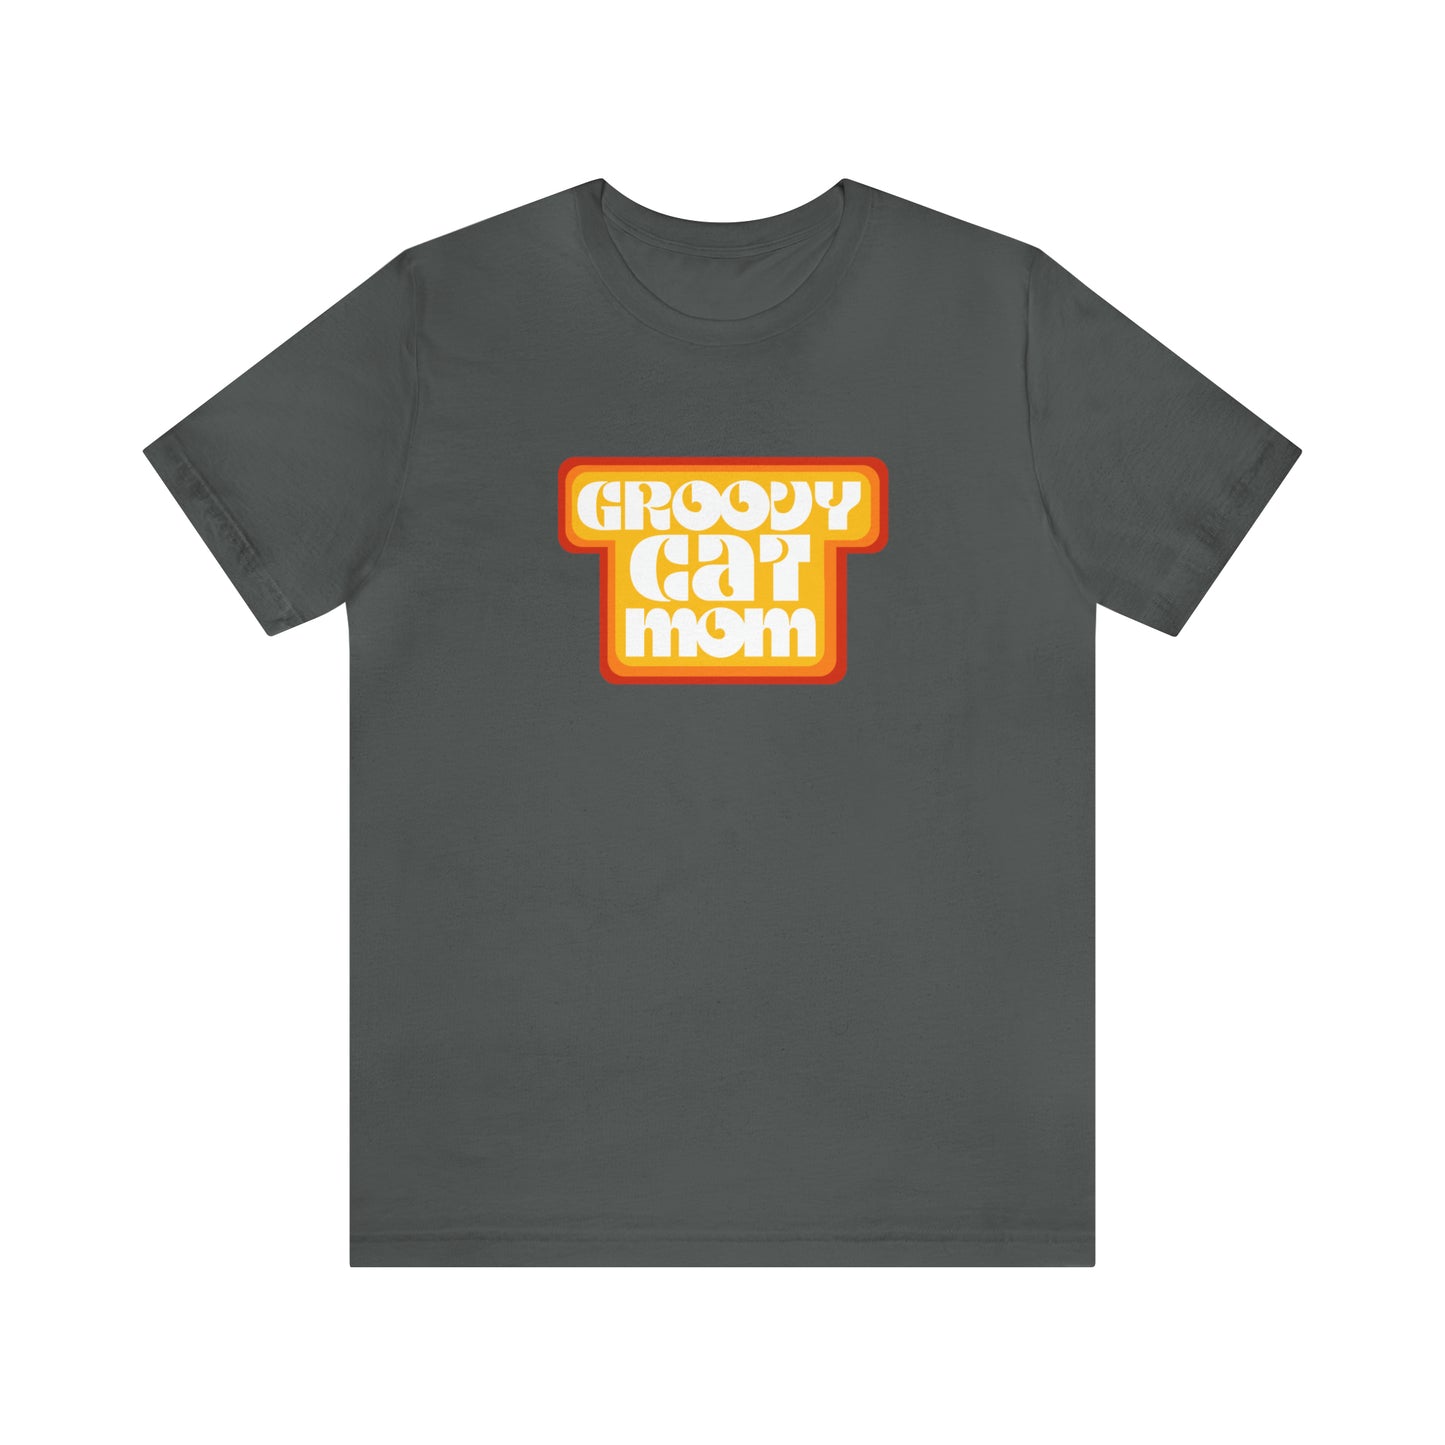 Groovy Cat Mom T-Shirt